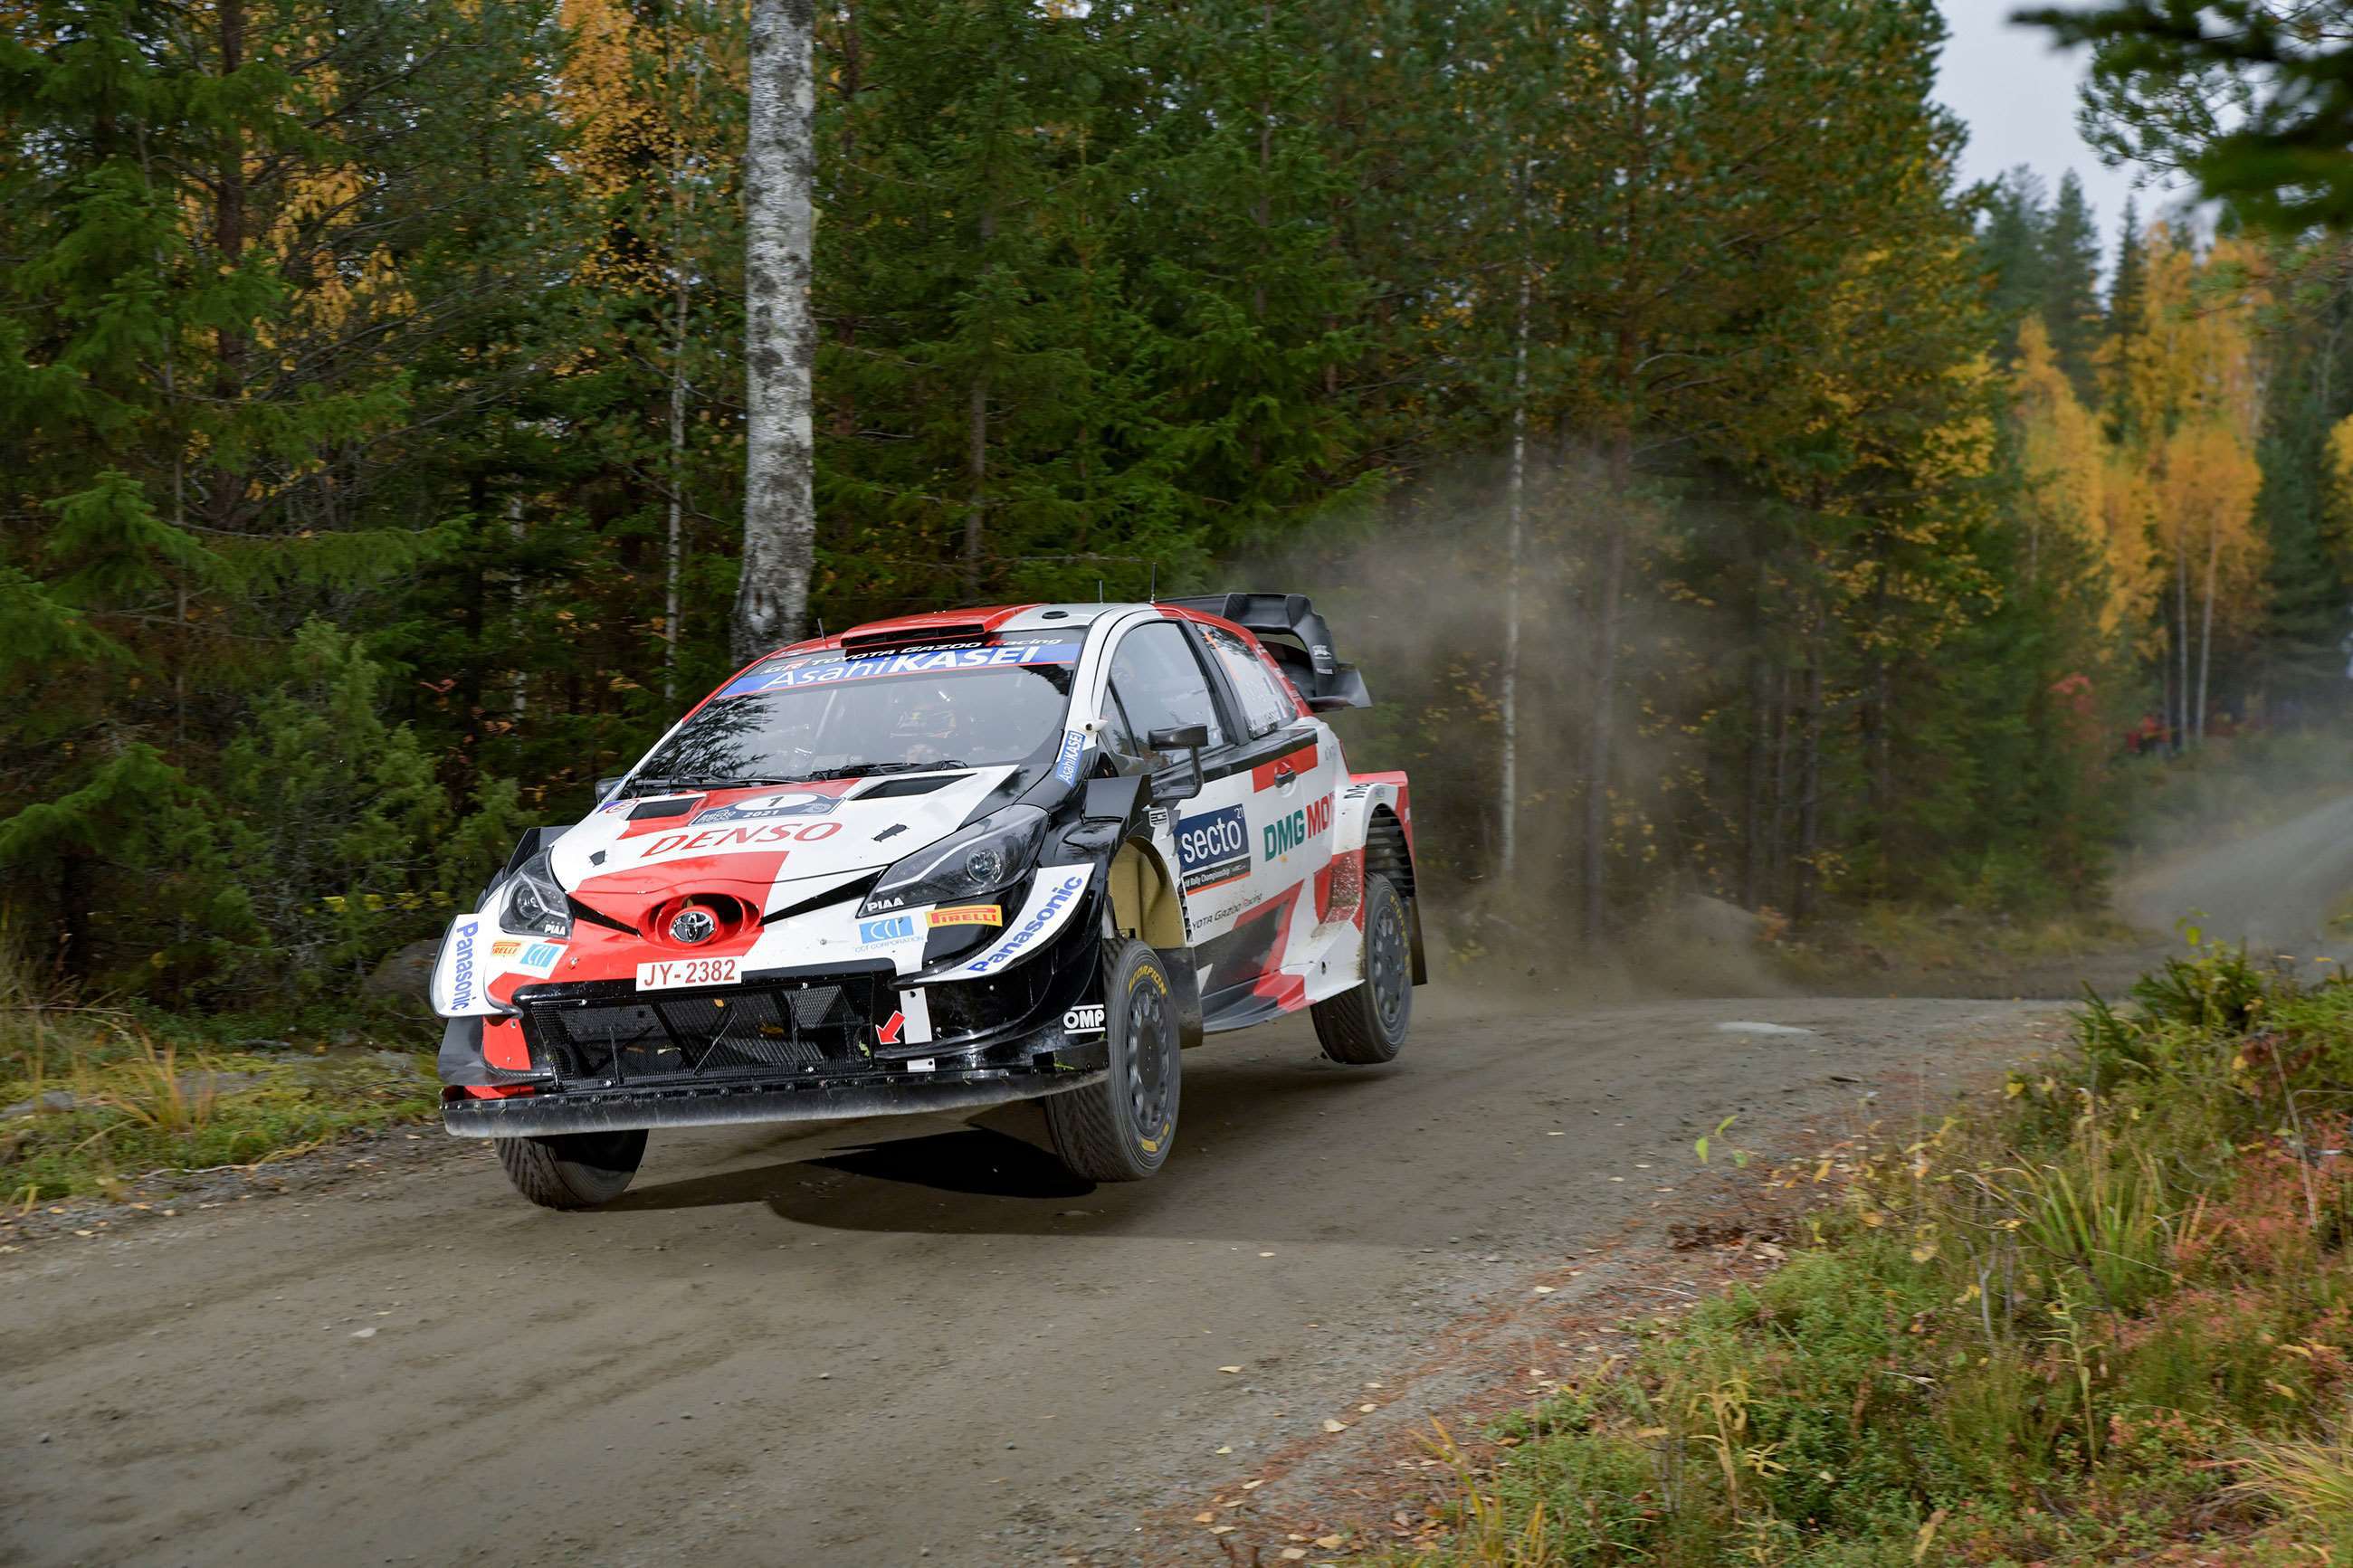 wrc-2021-rally-finland-sebastien-ogier-toyota-yaris-mcklein-mi-goodwood-04102021.jpg